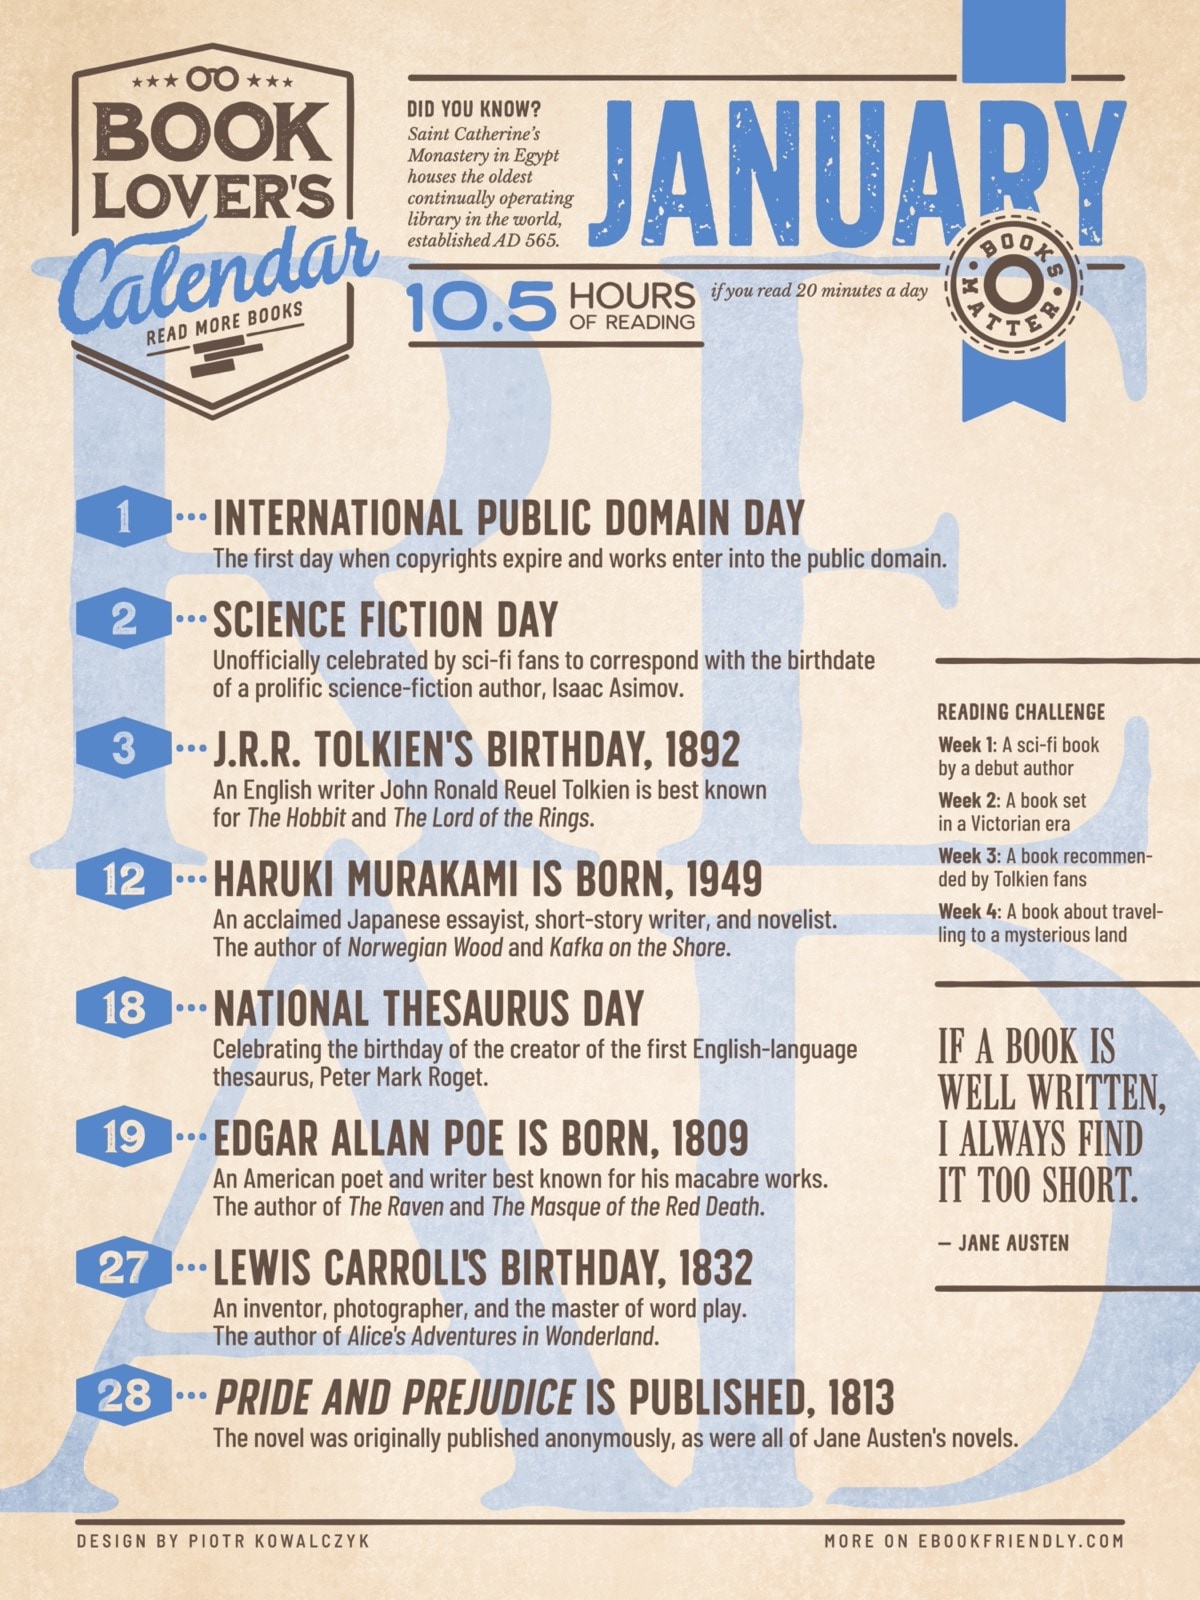 Literary calendar - January